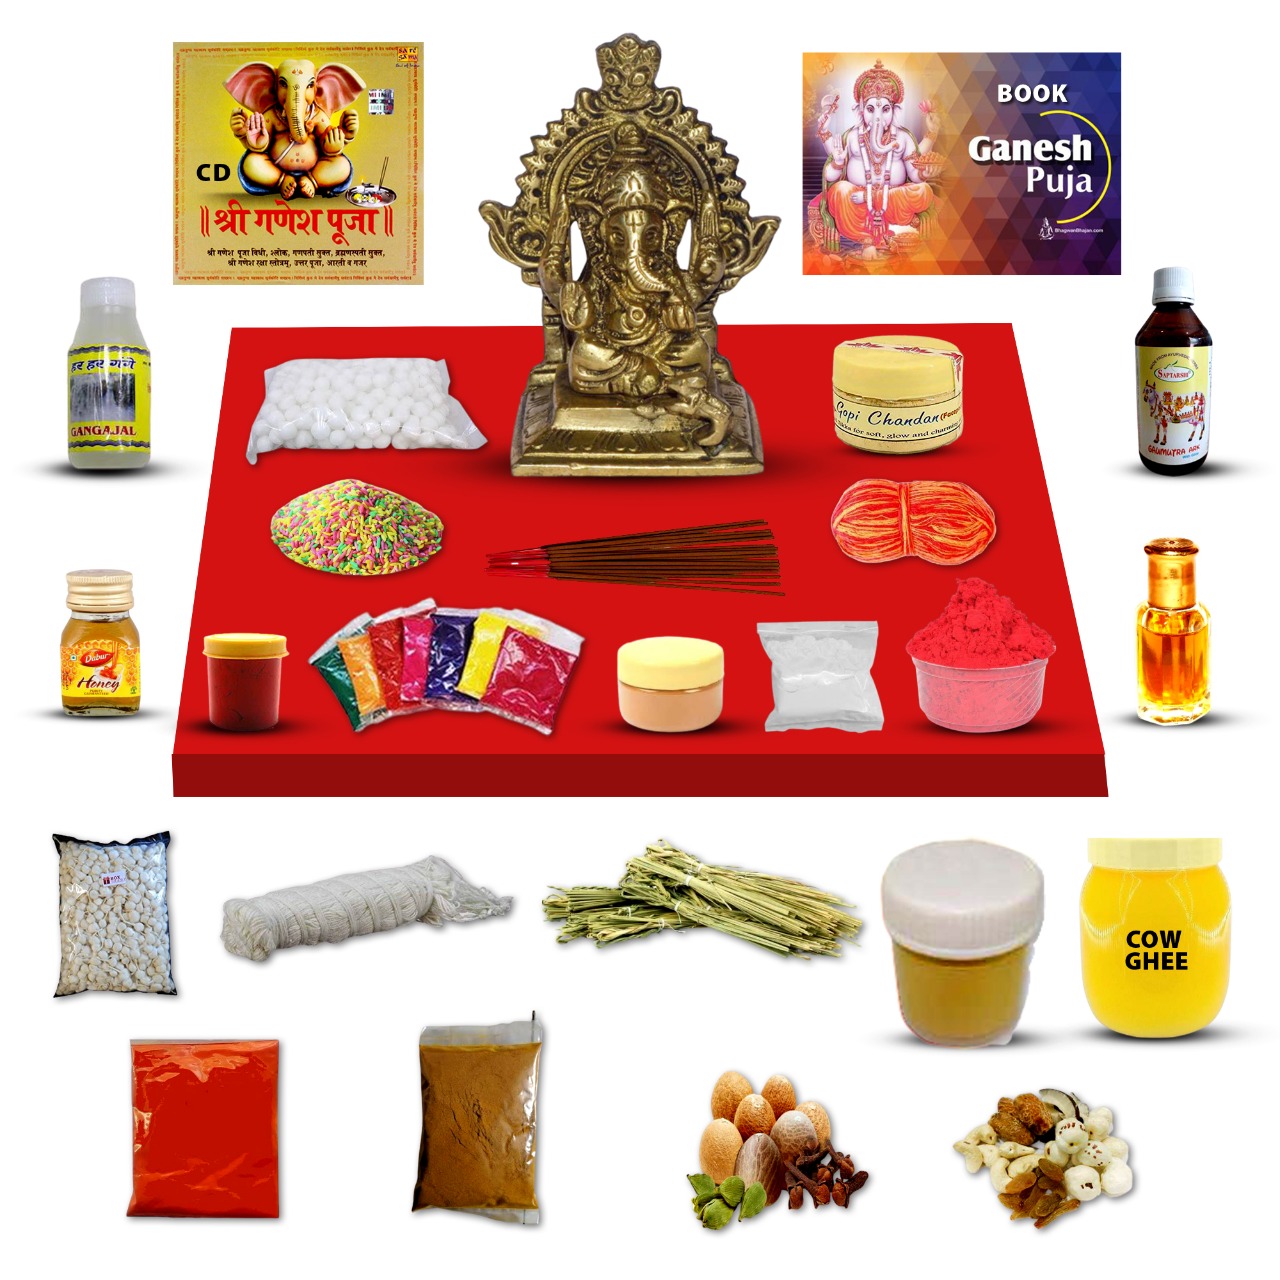 Ganesha Puja Kit - Delivery outside India